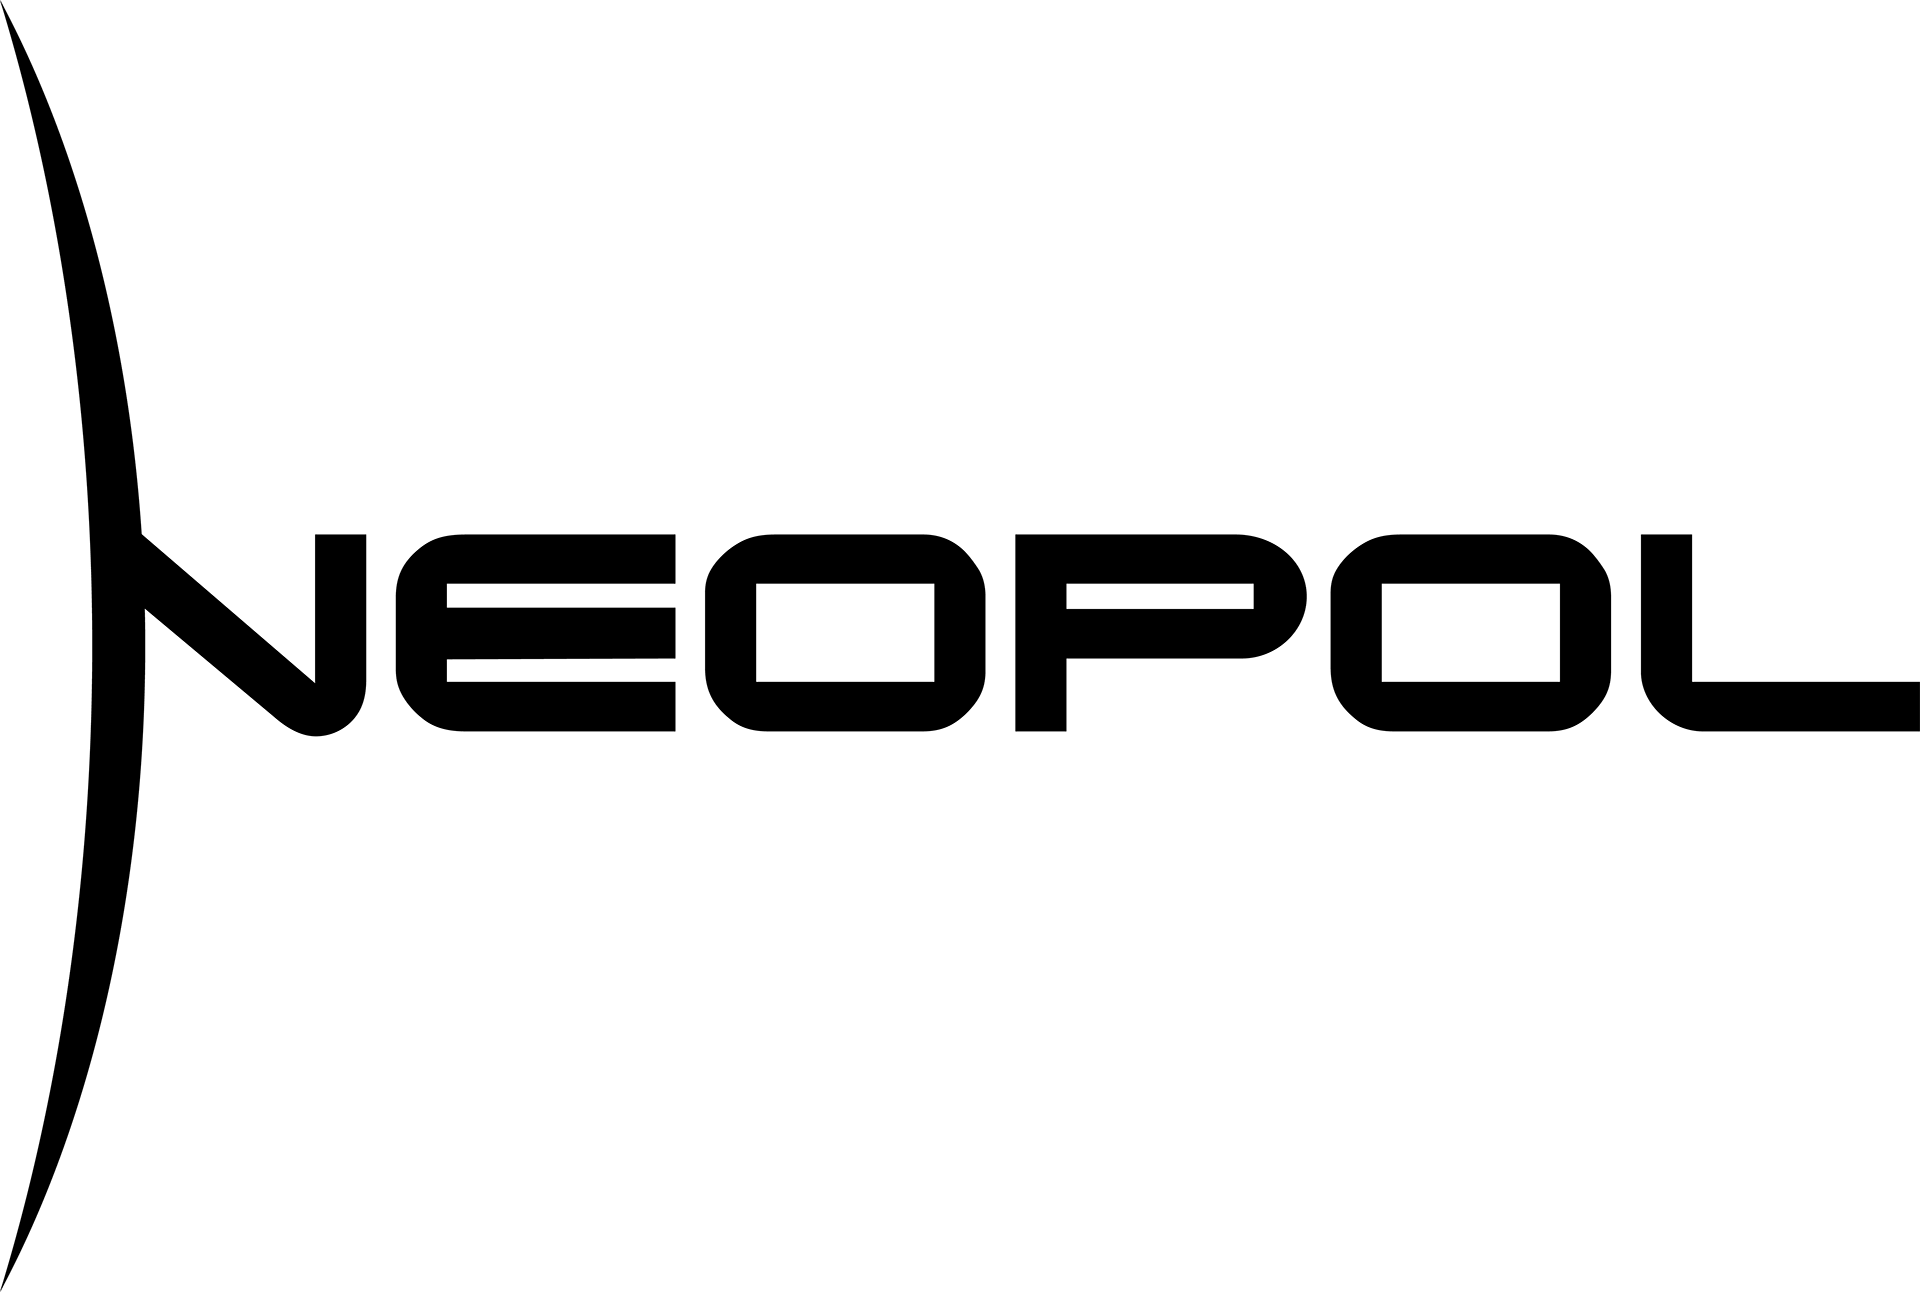 Neopol Film Logo